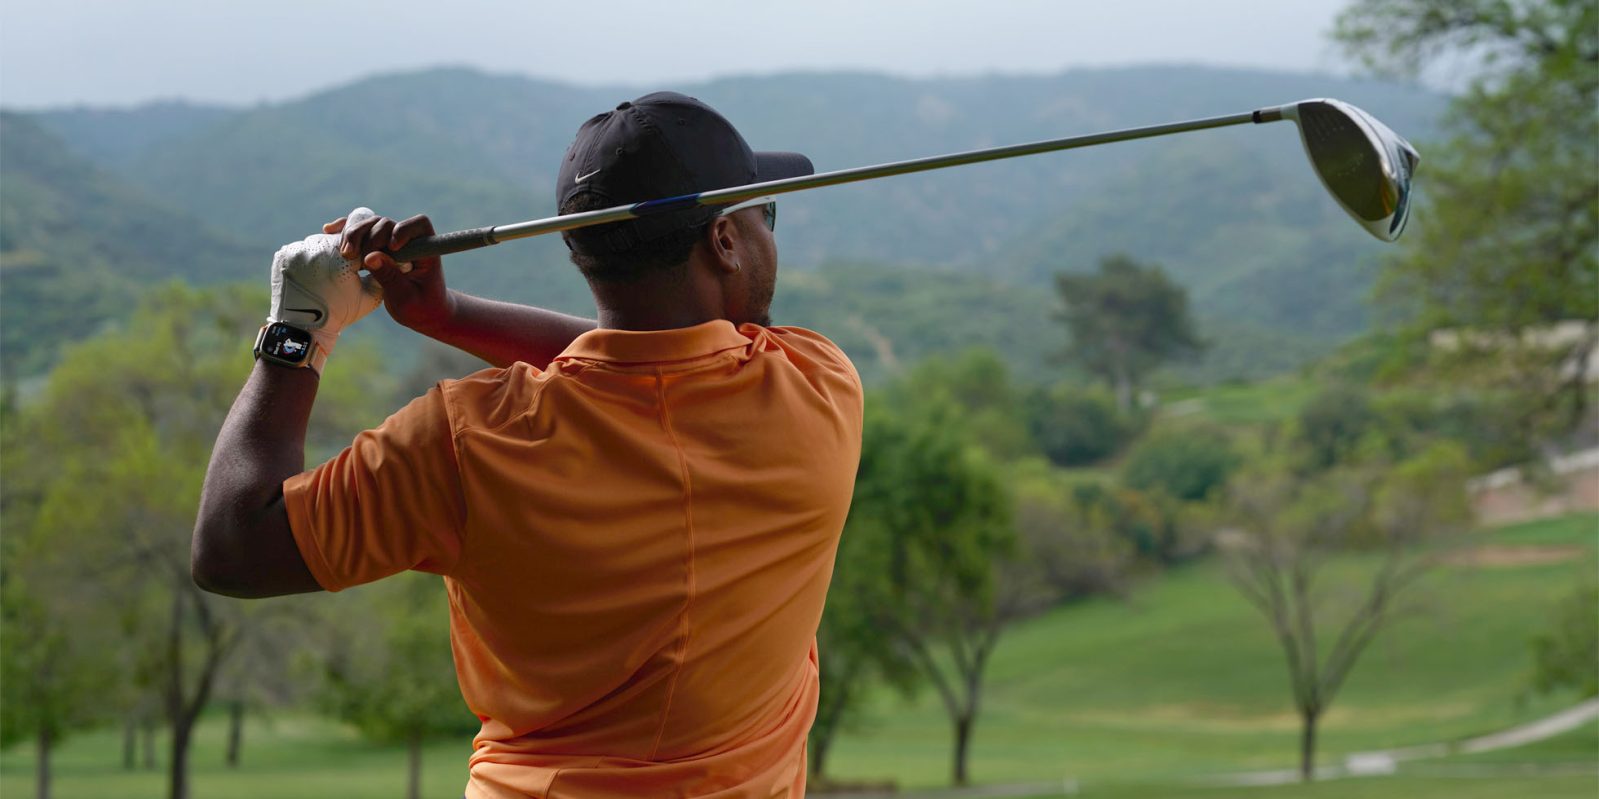 Apple Watch golfing functionality (golfer using GolfShot)